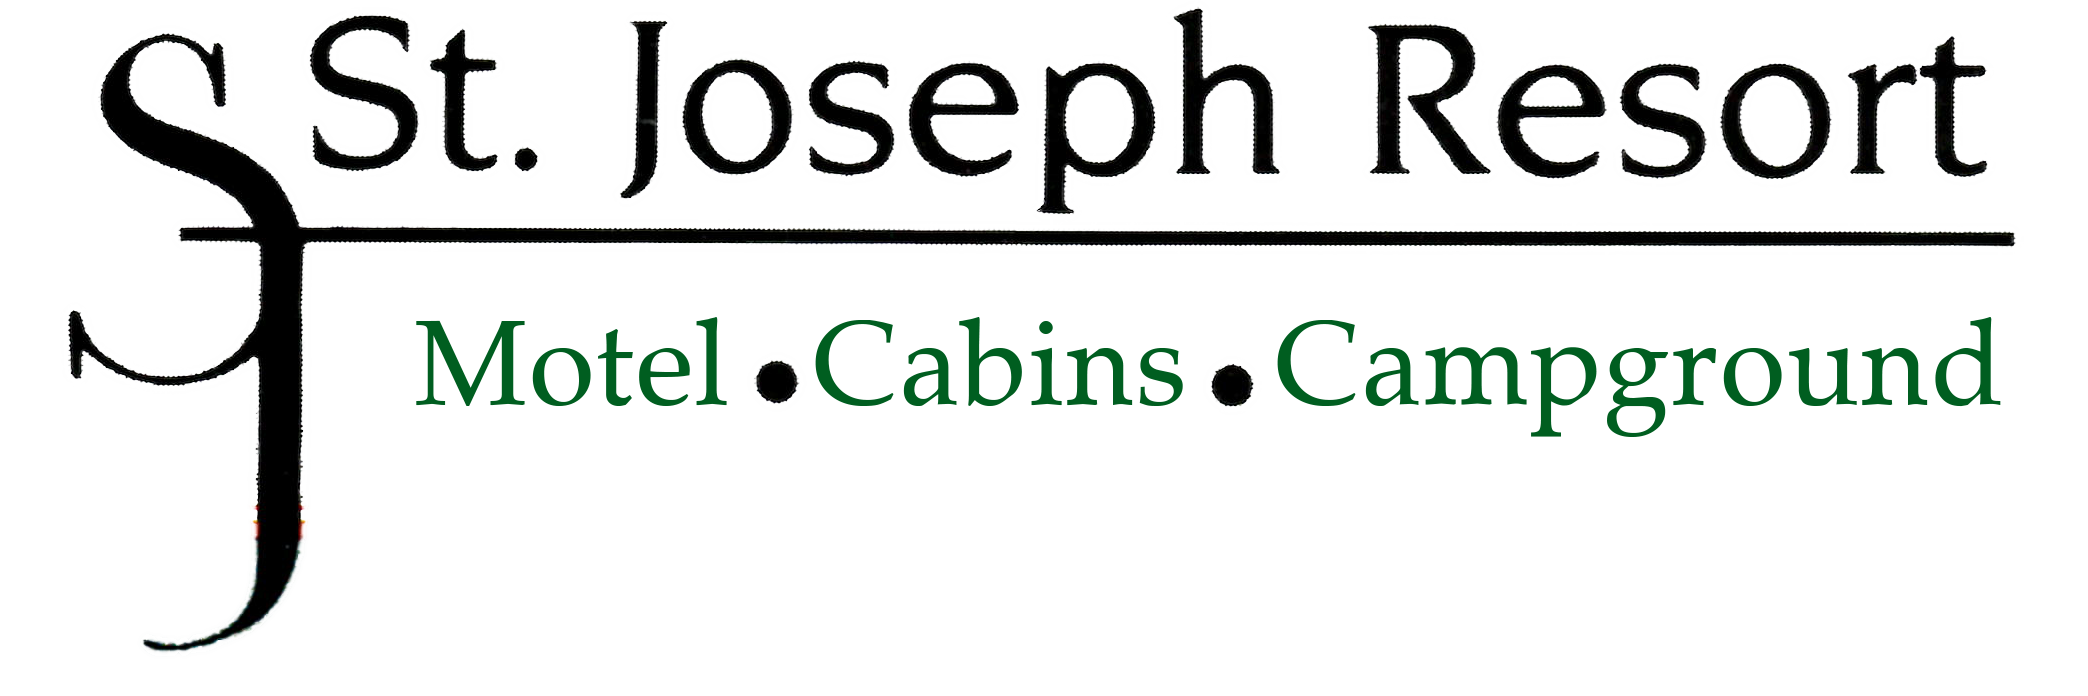 St. Joseph Resort - Cabins, Motel & Campground